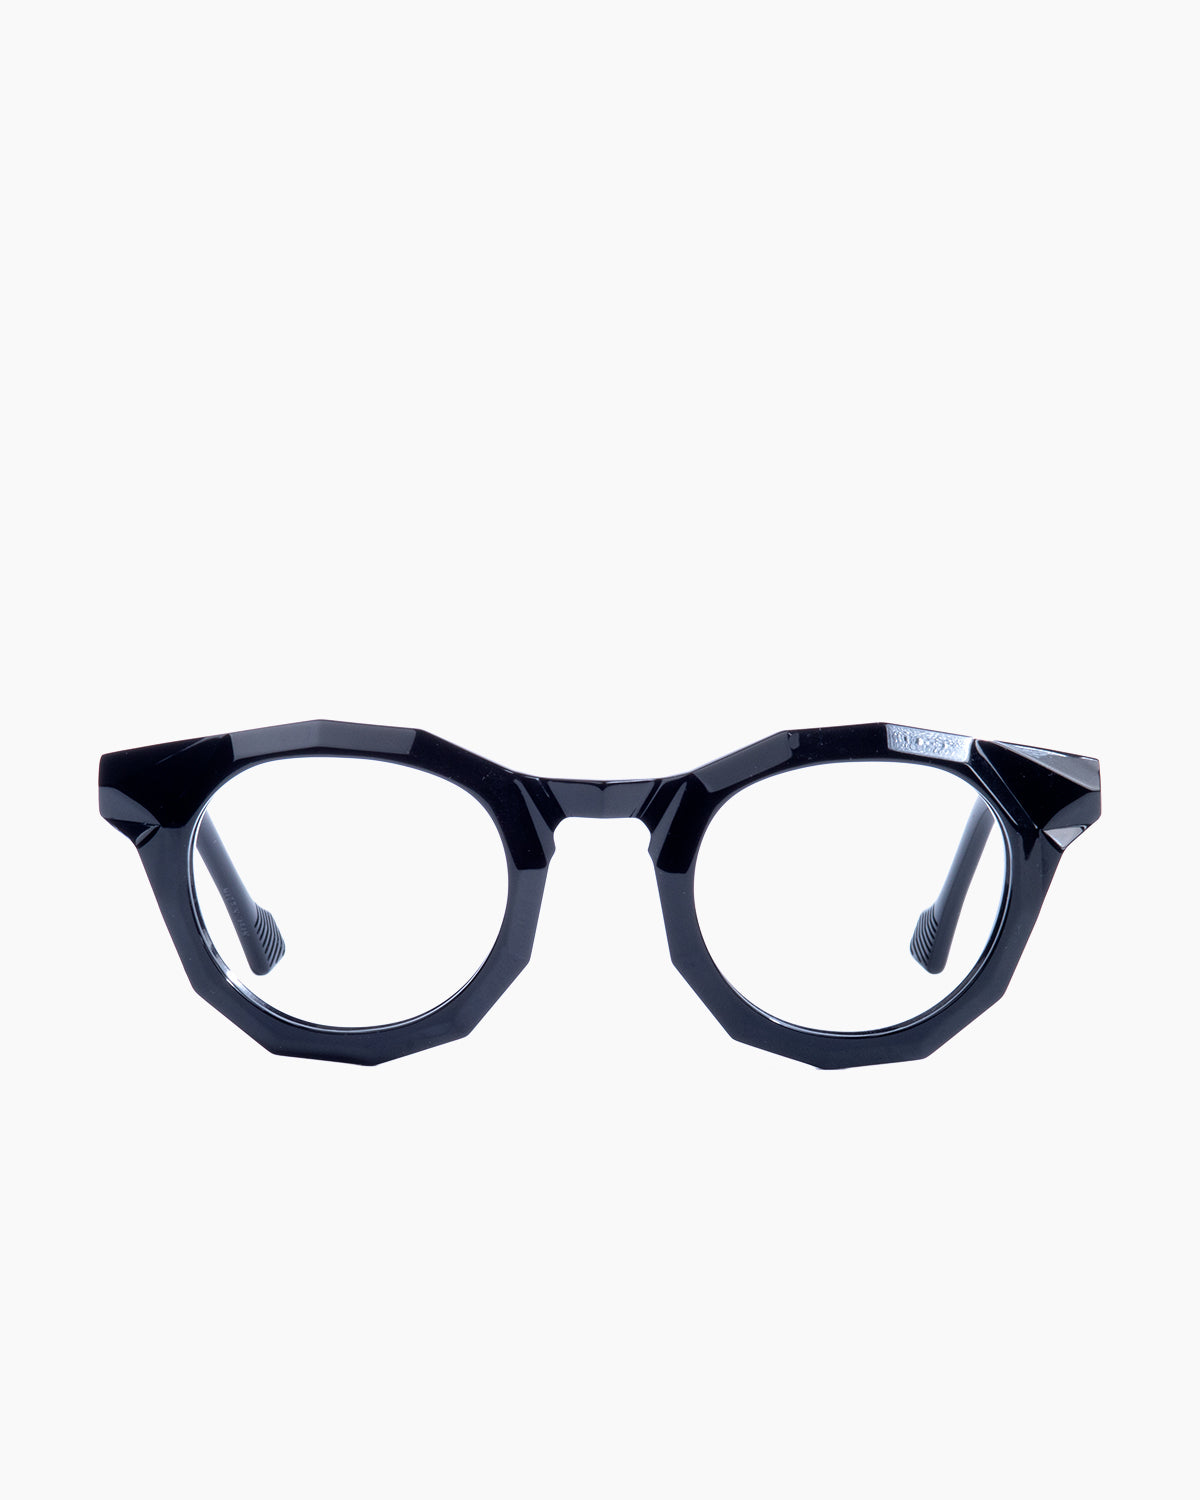 Yohji Yamamoto - Look010 - a001 | glasses bar:  Marie-Sophie Dion